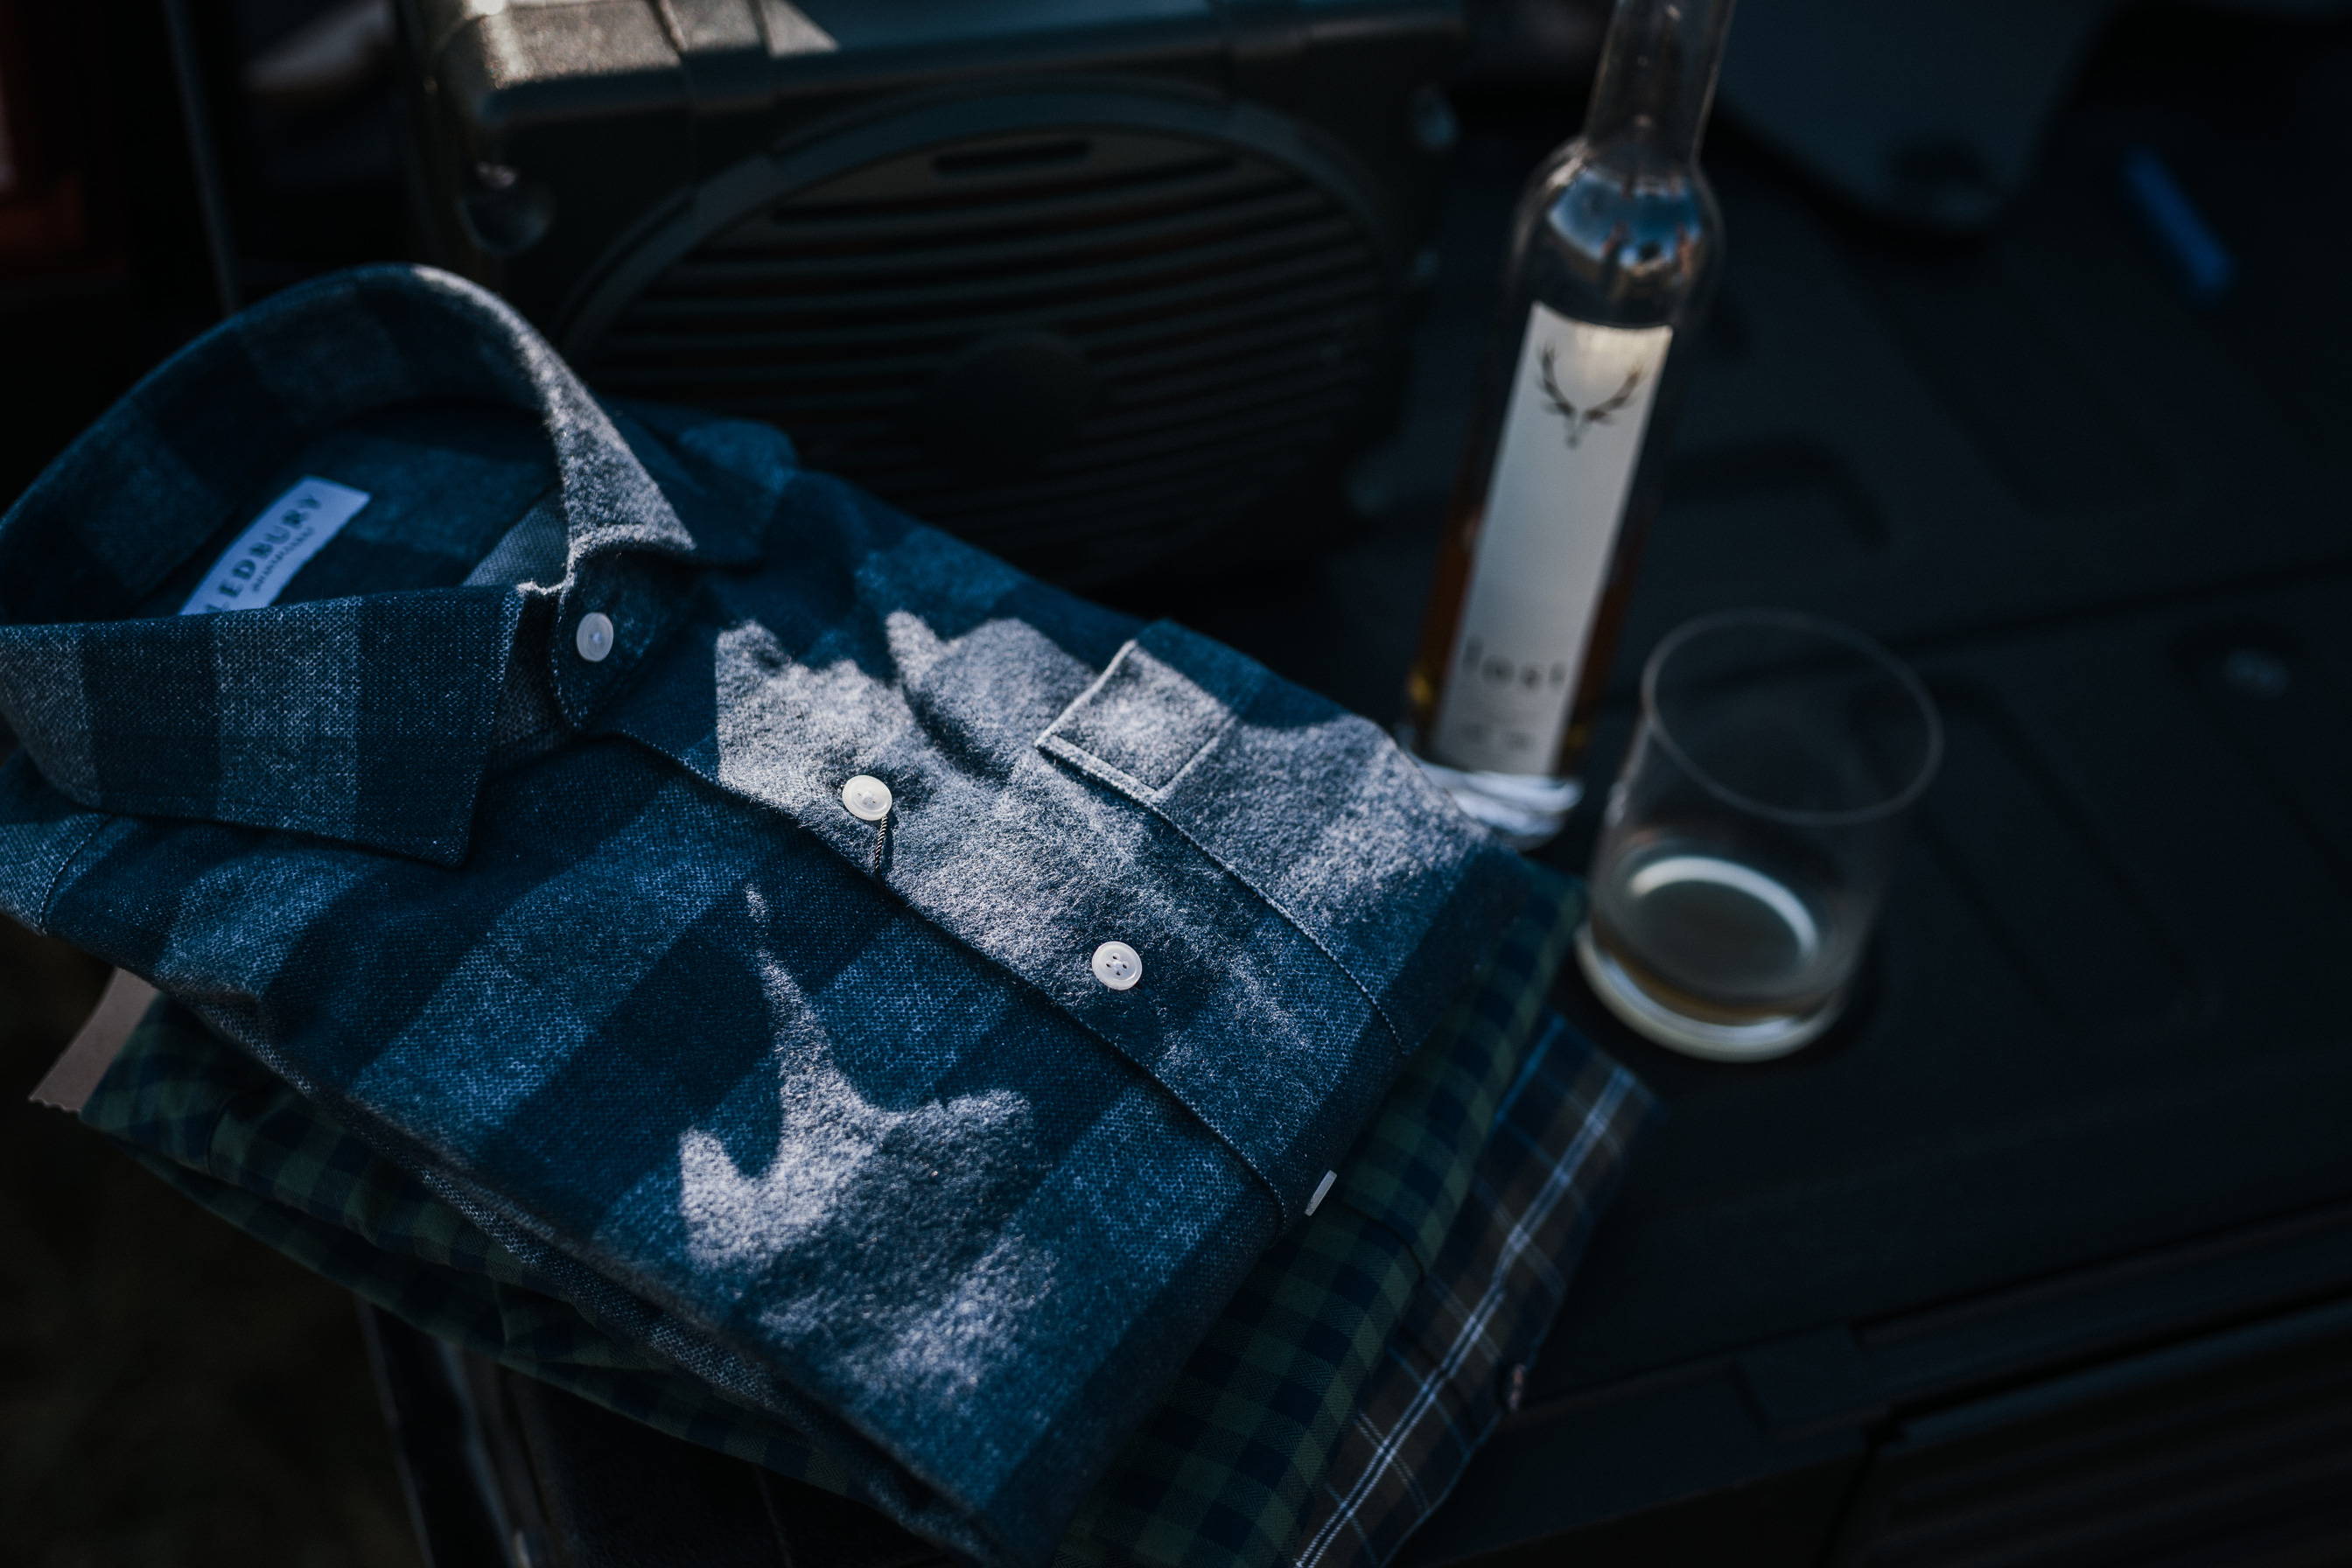 The Navy Randolph Custom shirt folded next to a bottle of Lost Whiskey.